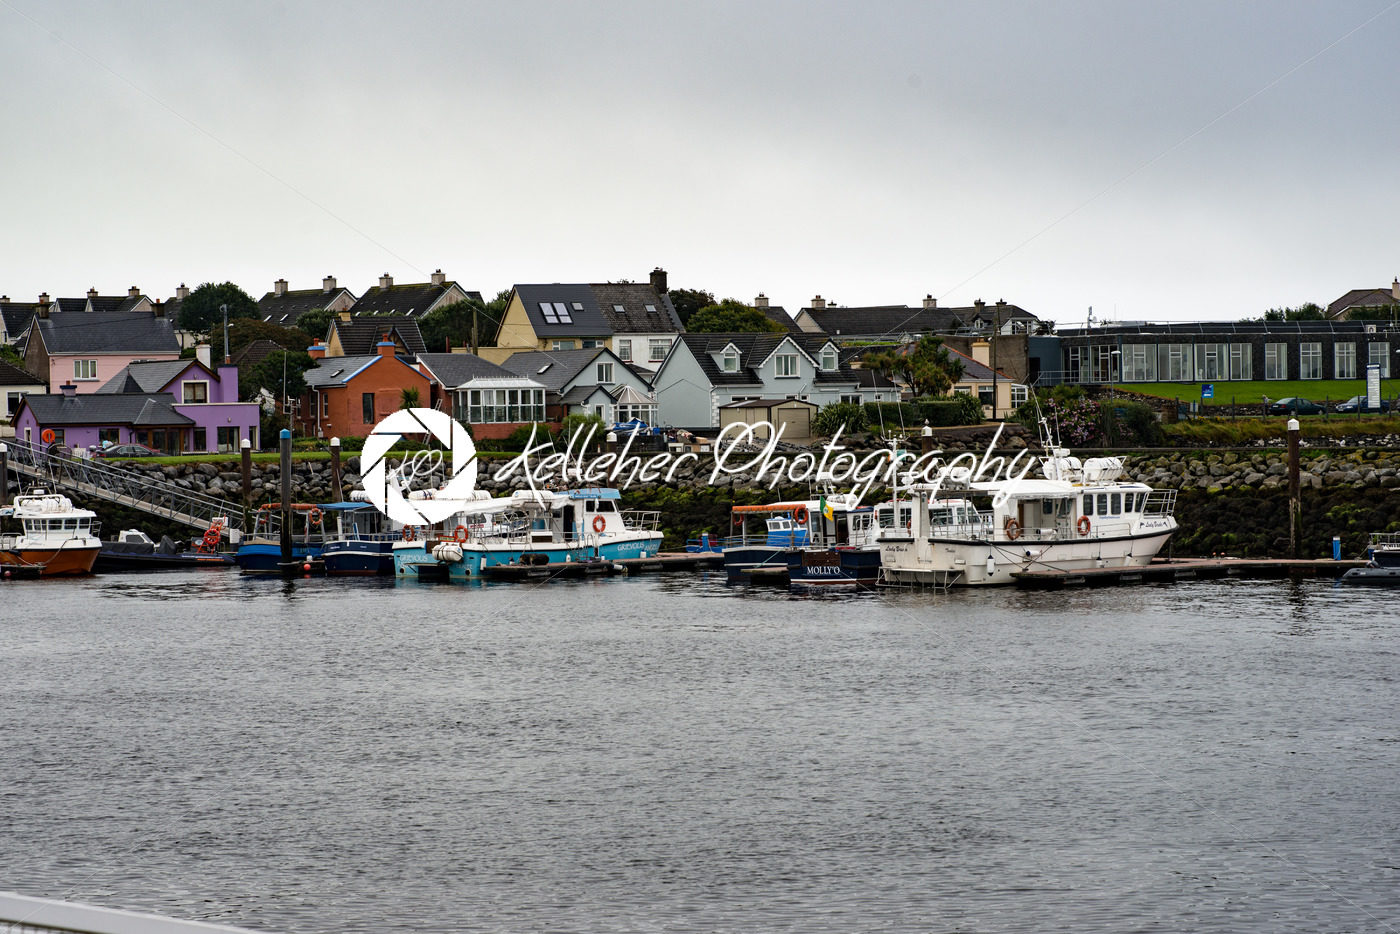 DINGLE, IRELAND – AUGUST 21, 2017: Irish seaport scenery in Dingle, County Kerry, Ireland - Kelleher Photography Store